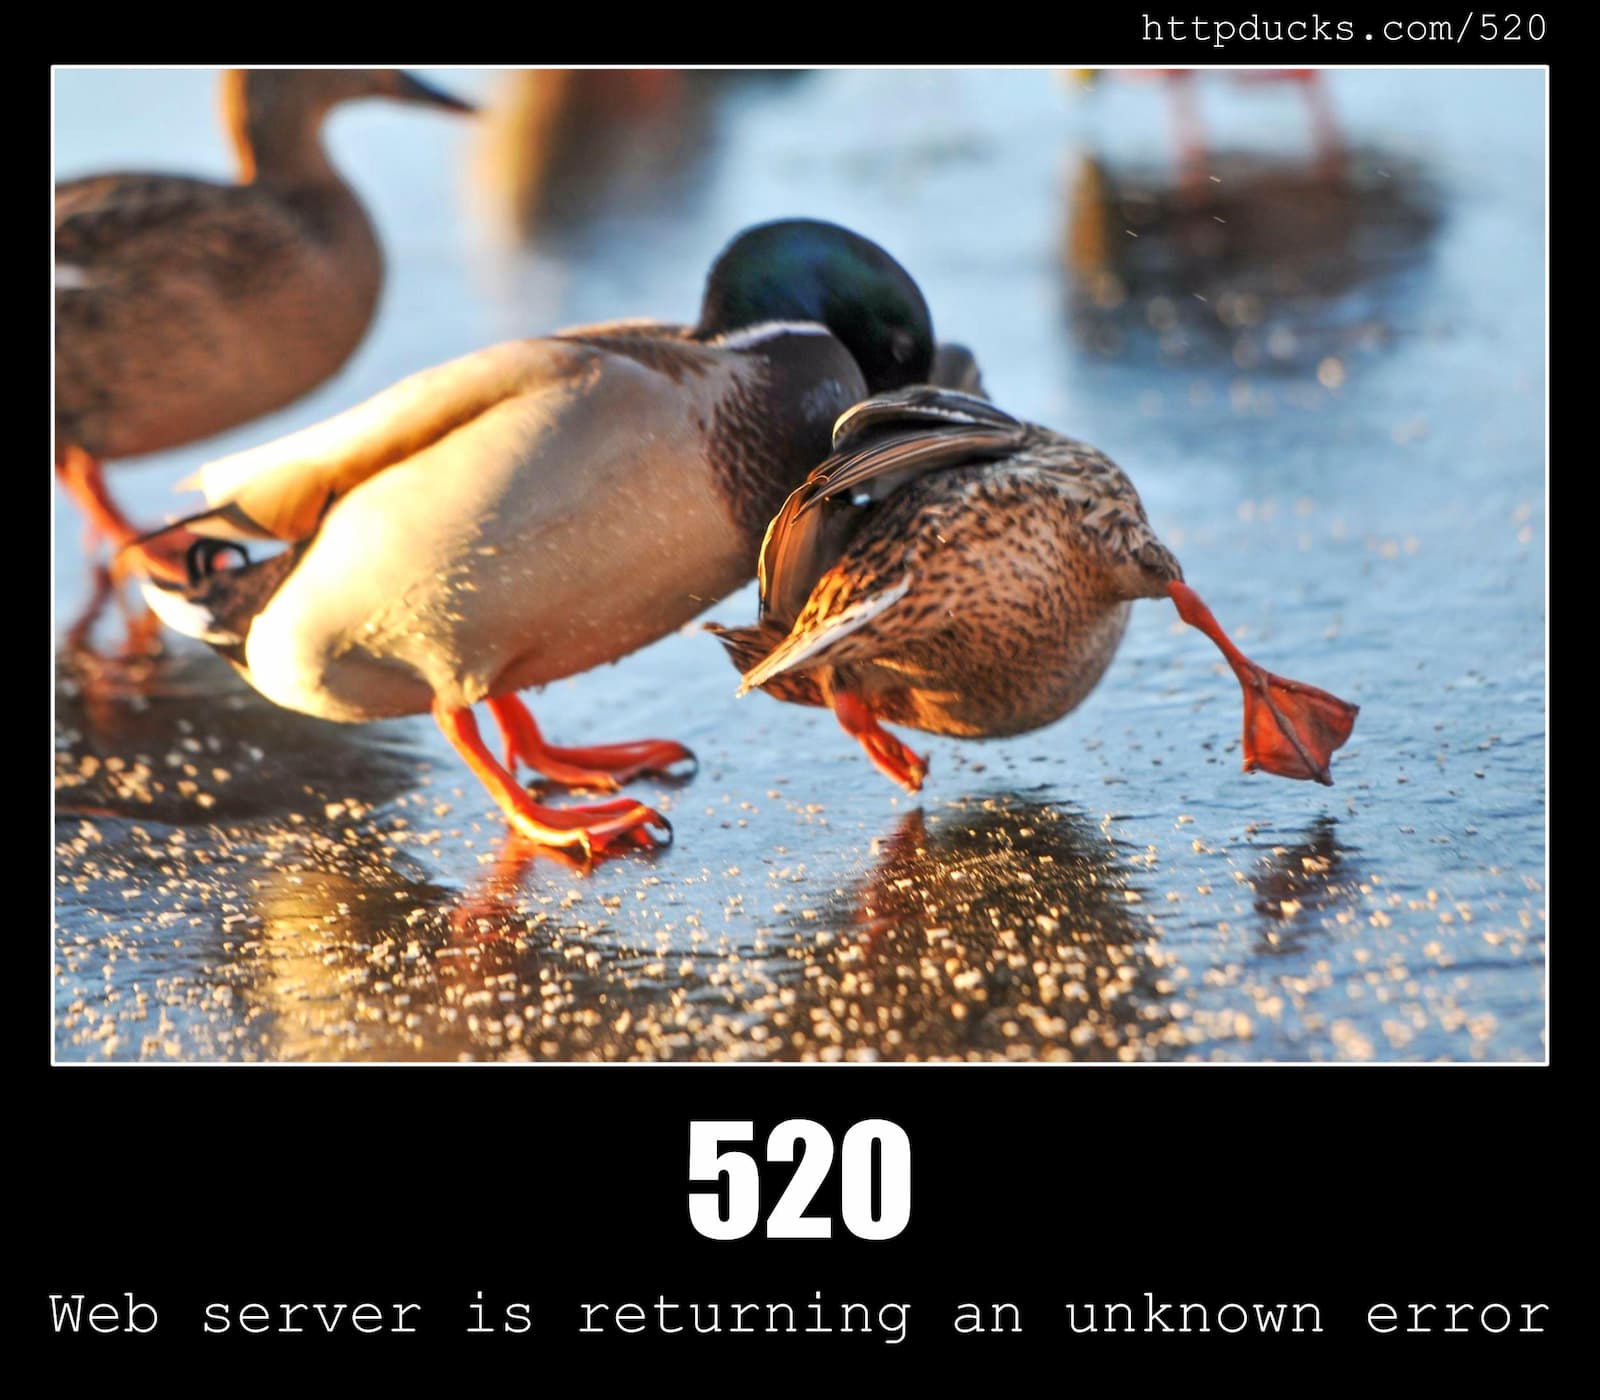 HTTP Status Code 520 Web server is returning an unknown error & Ducks